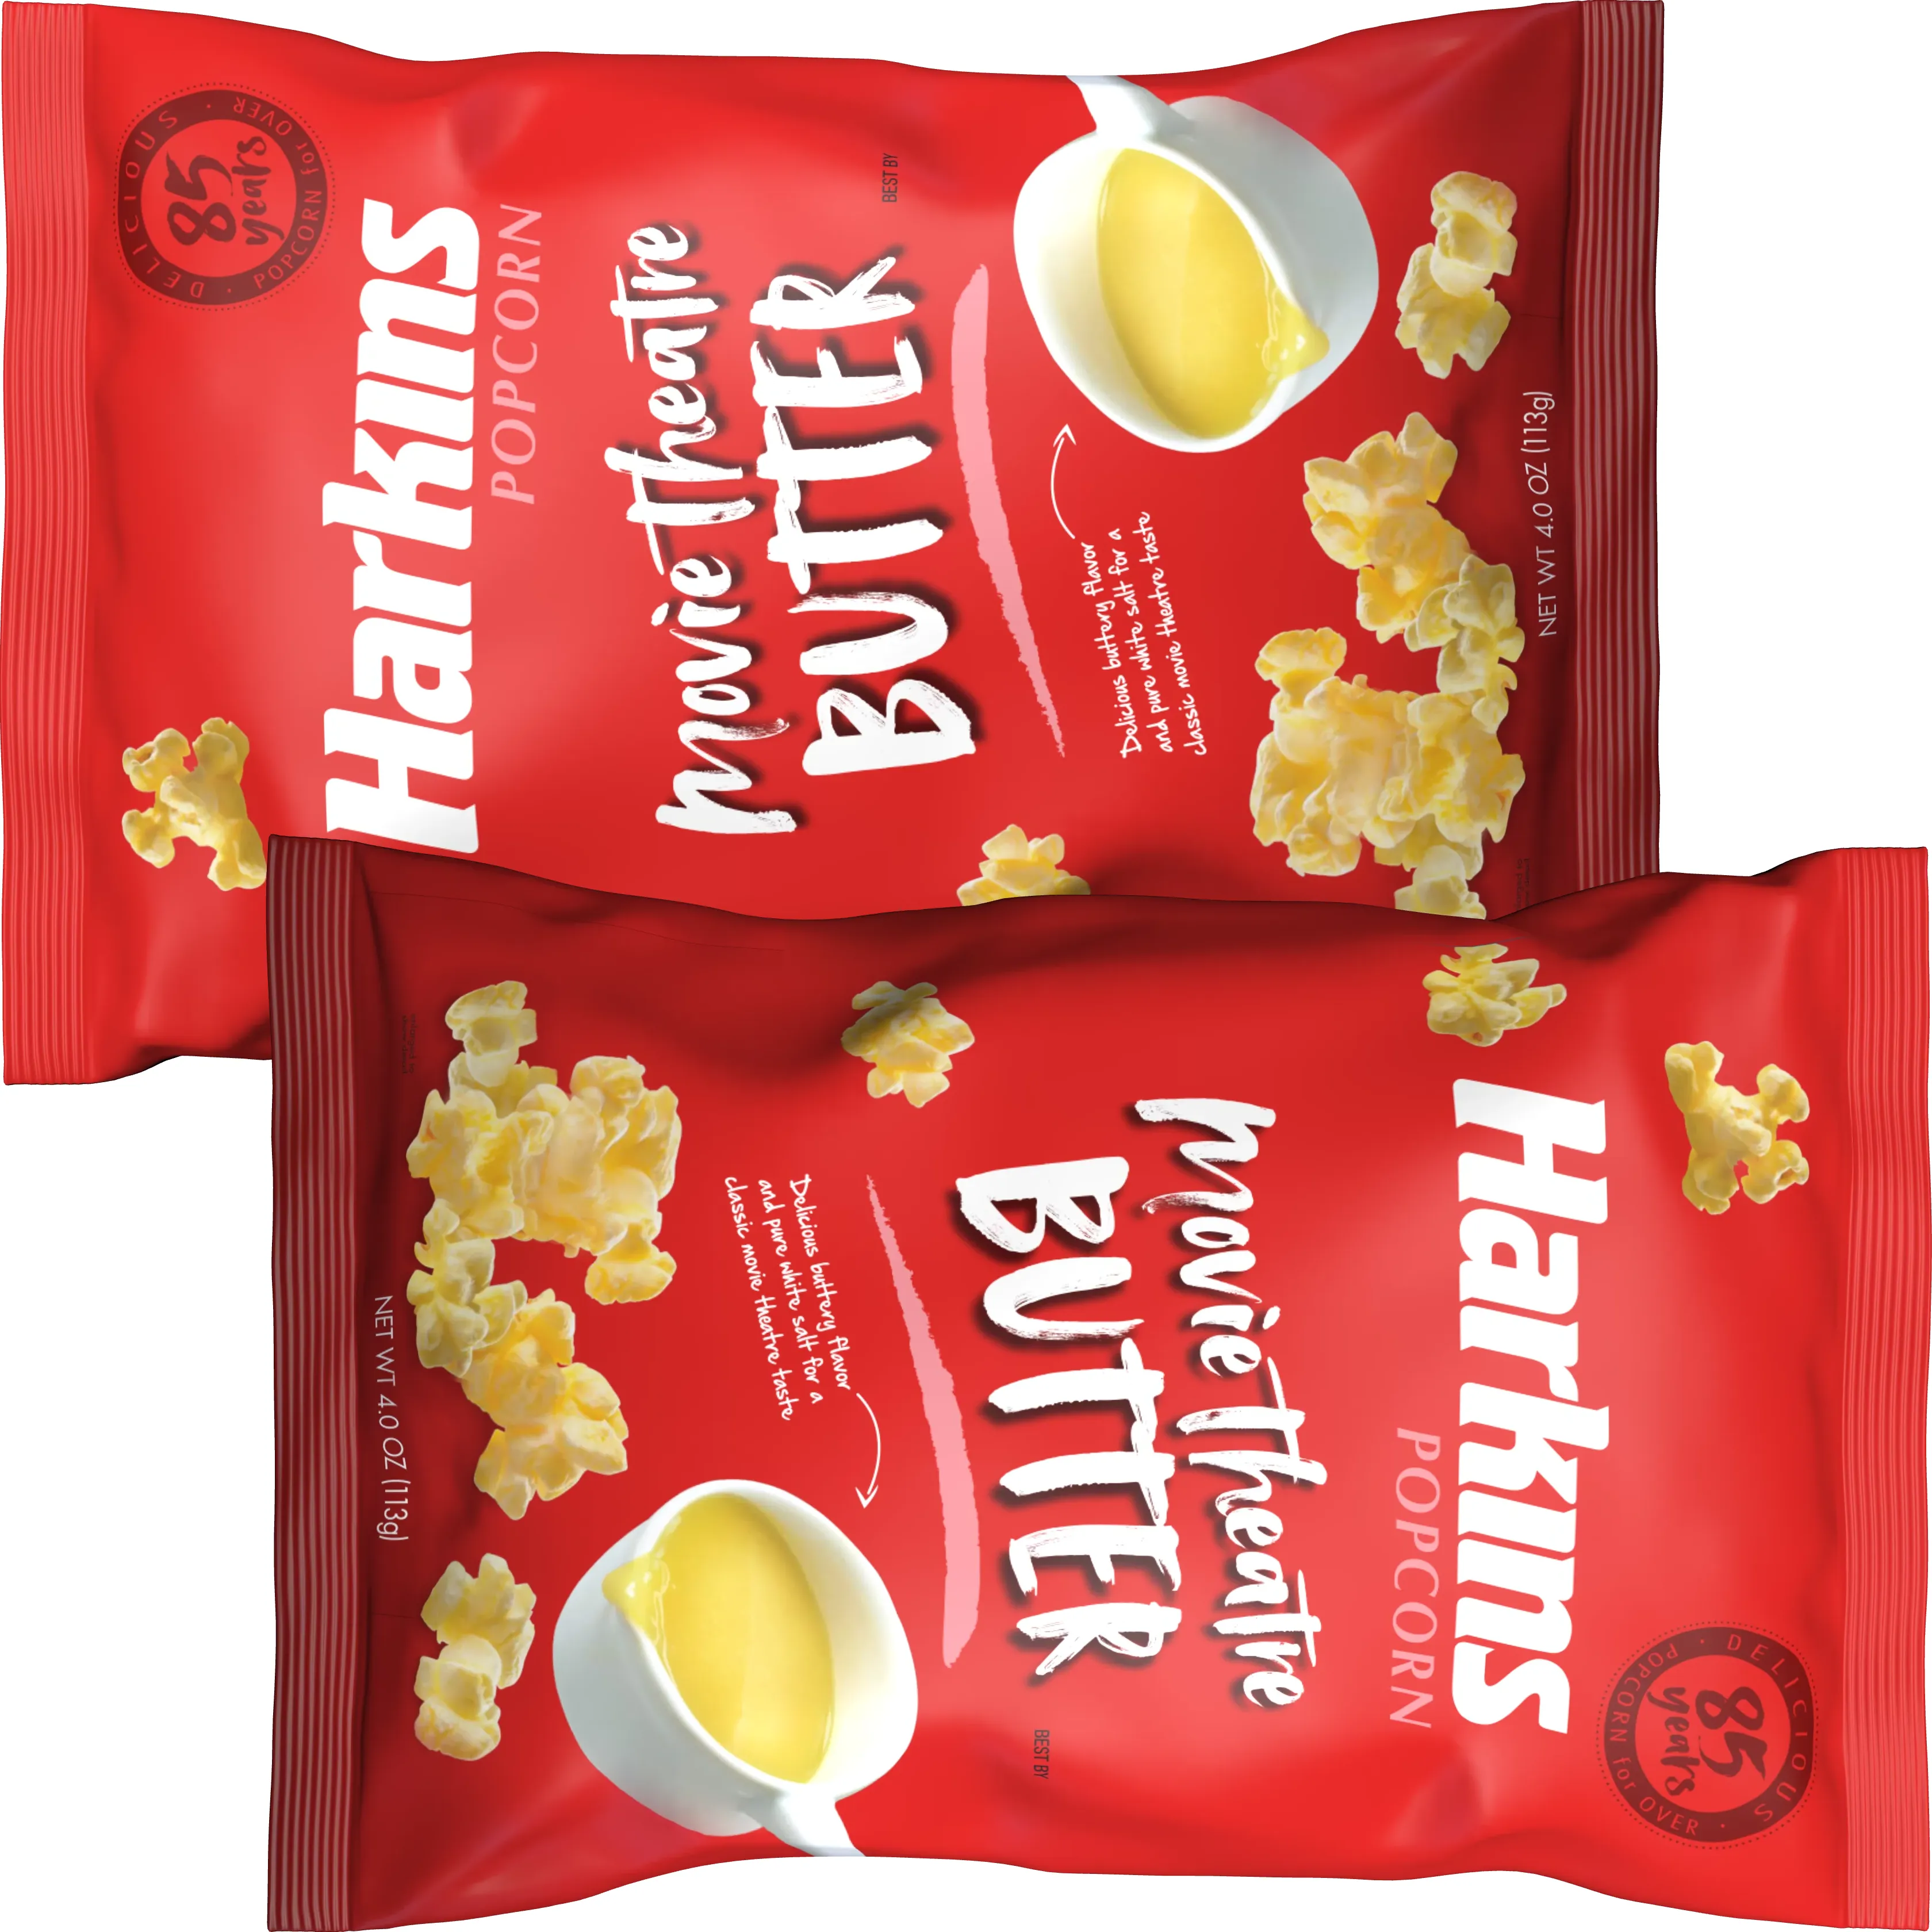 Free Harkins Movie Theatre Butter Popcorn